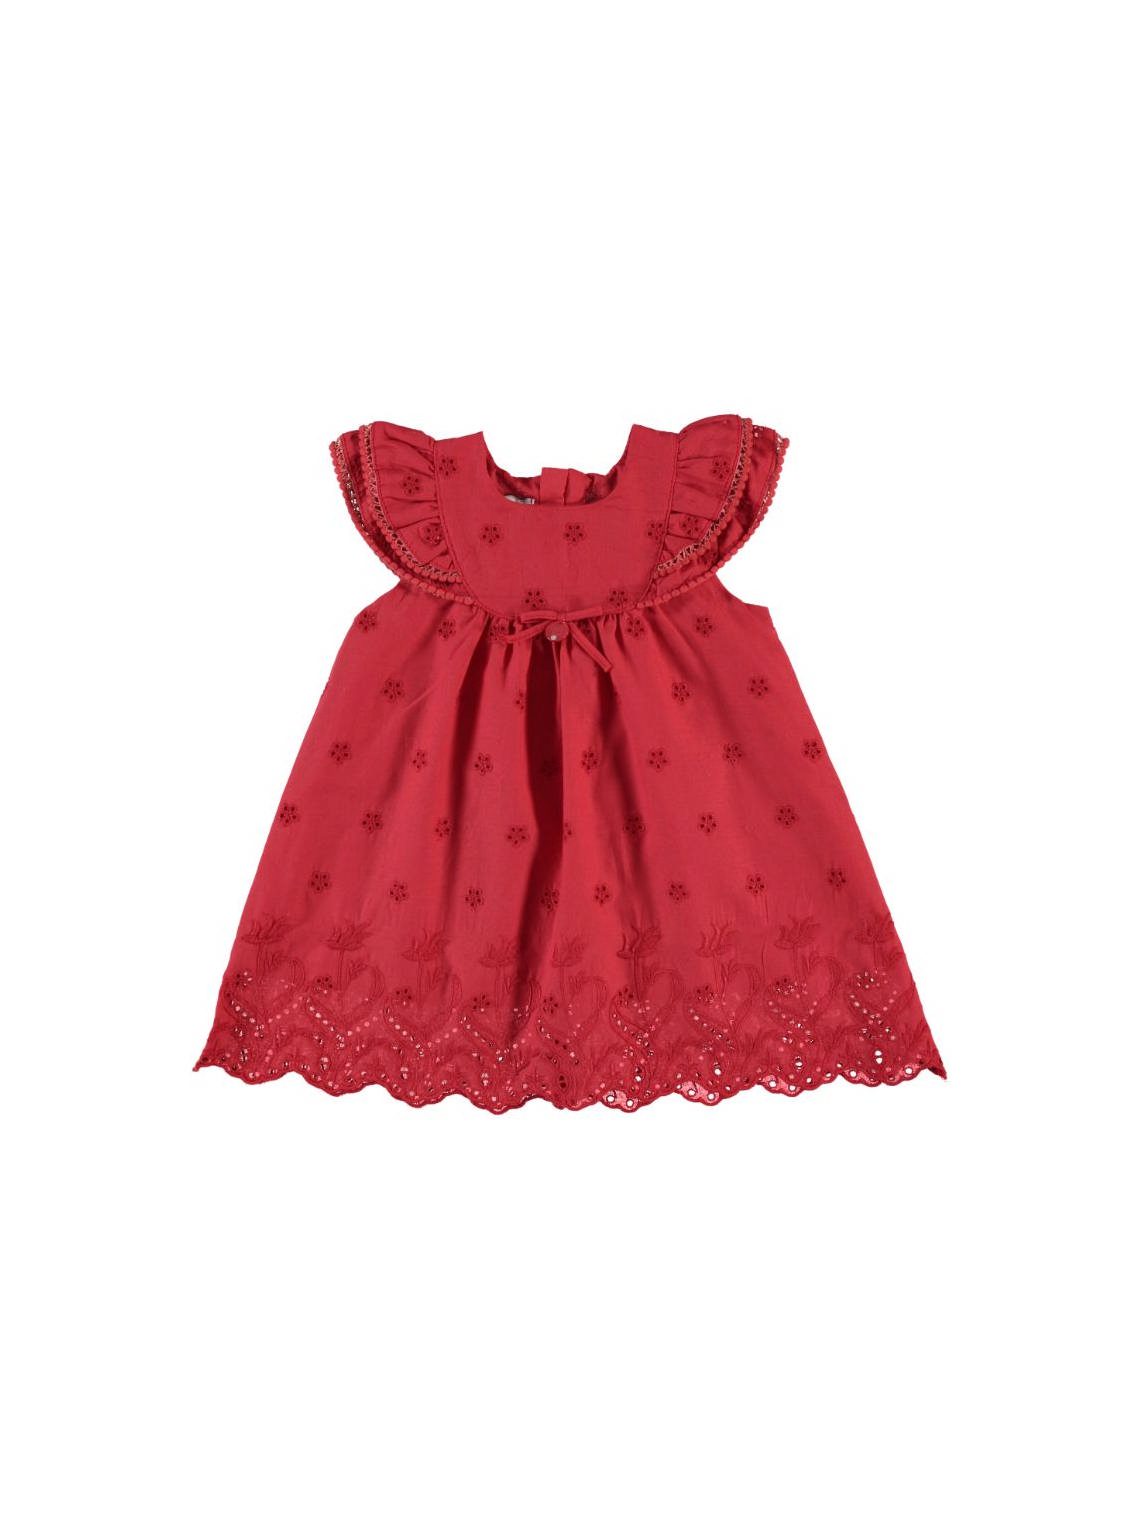 Exclusive Brand - Baby Girl Frilly Dress / 9M | 12M | 18M | 24M - Kids Fashion Turkey